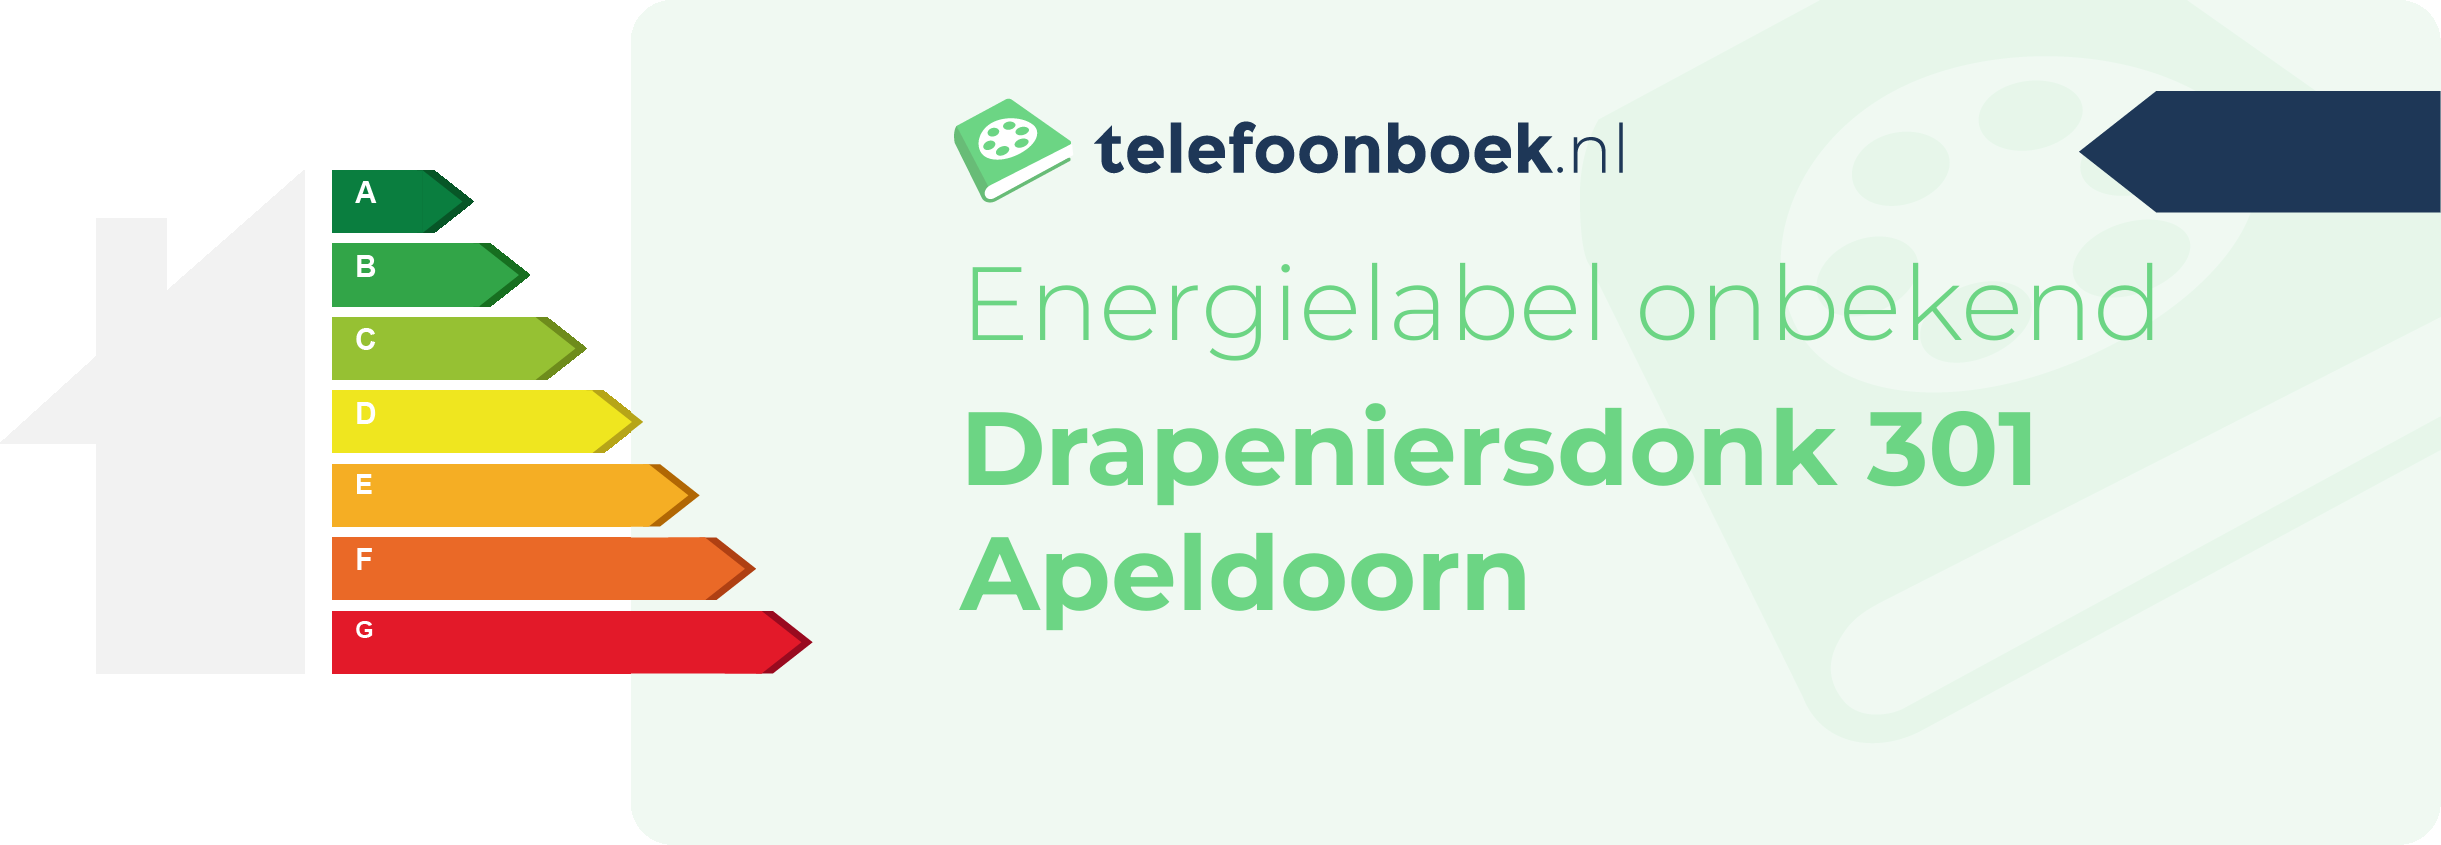 Energielabel Drapeniersdonk 301 Apeldoorn